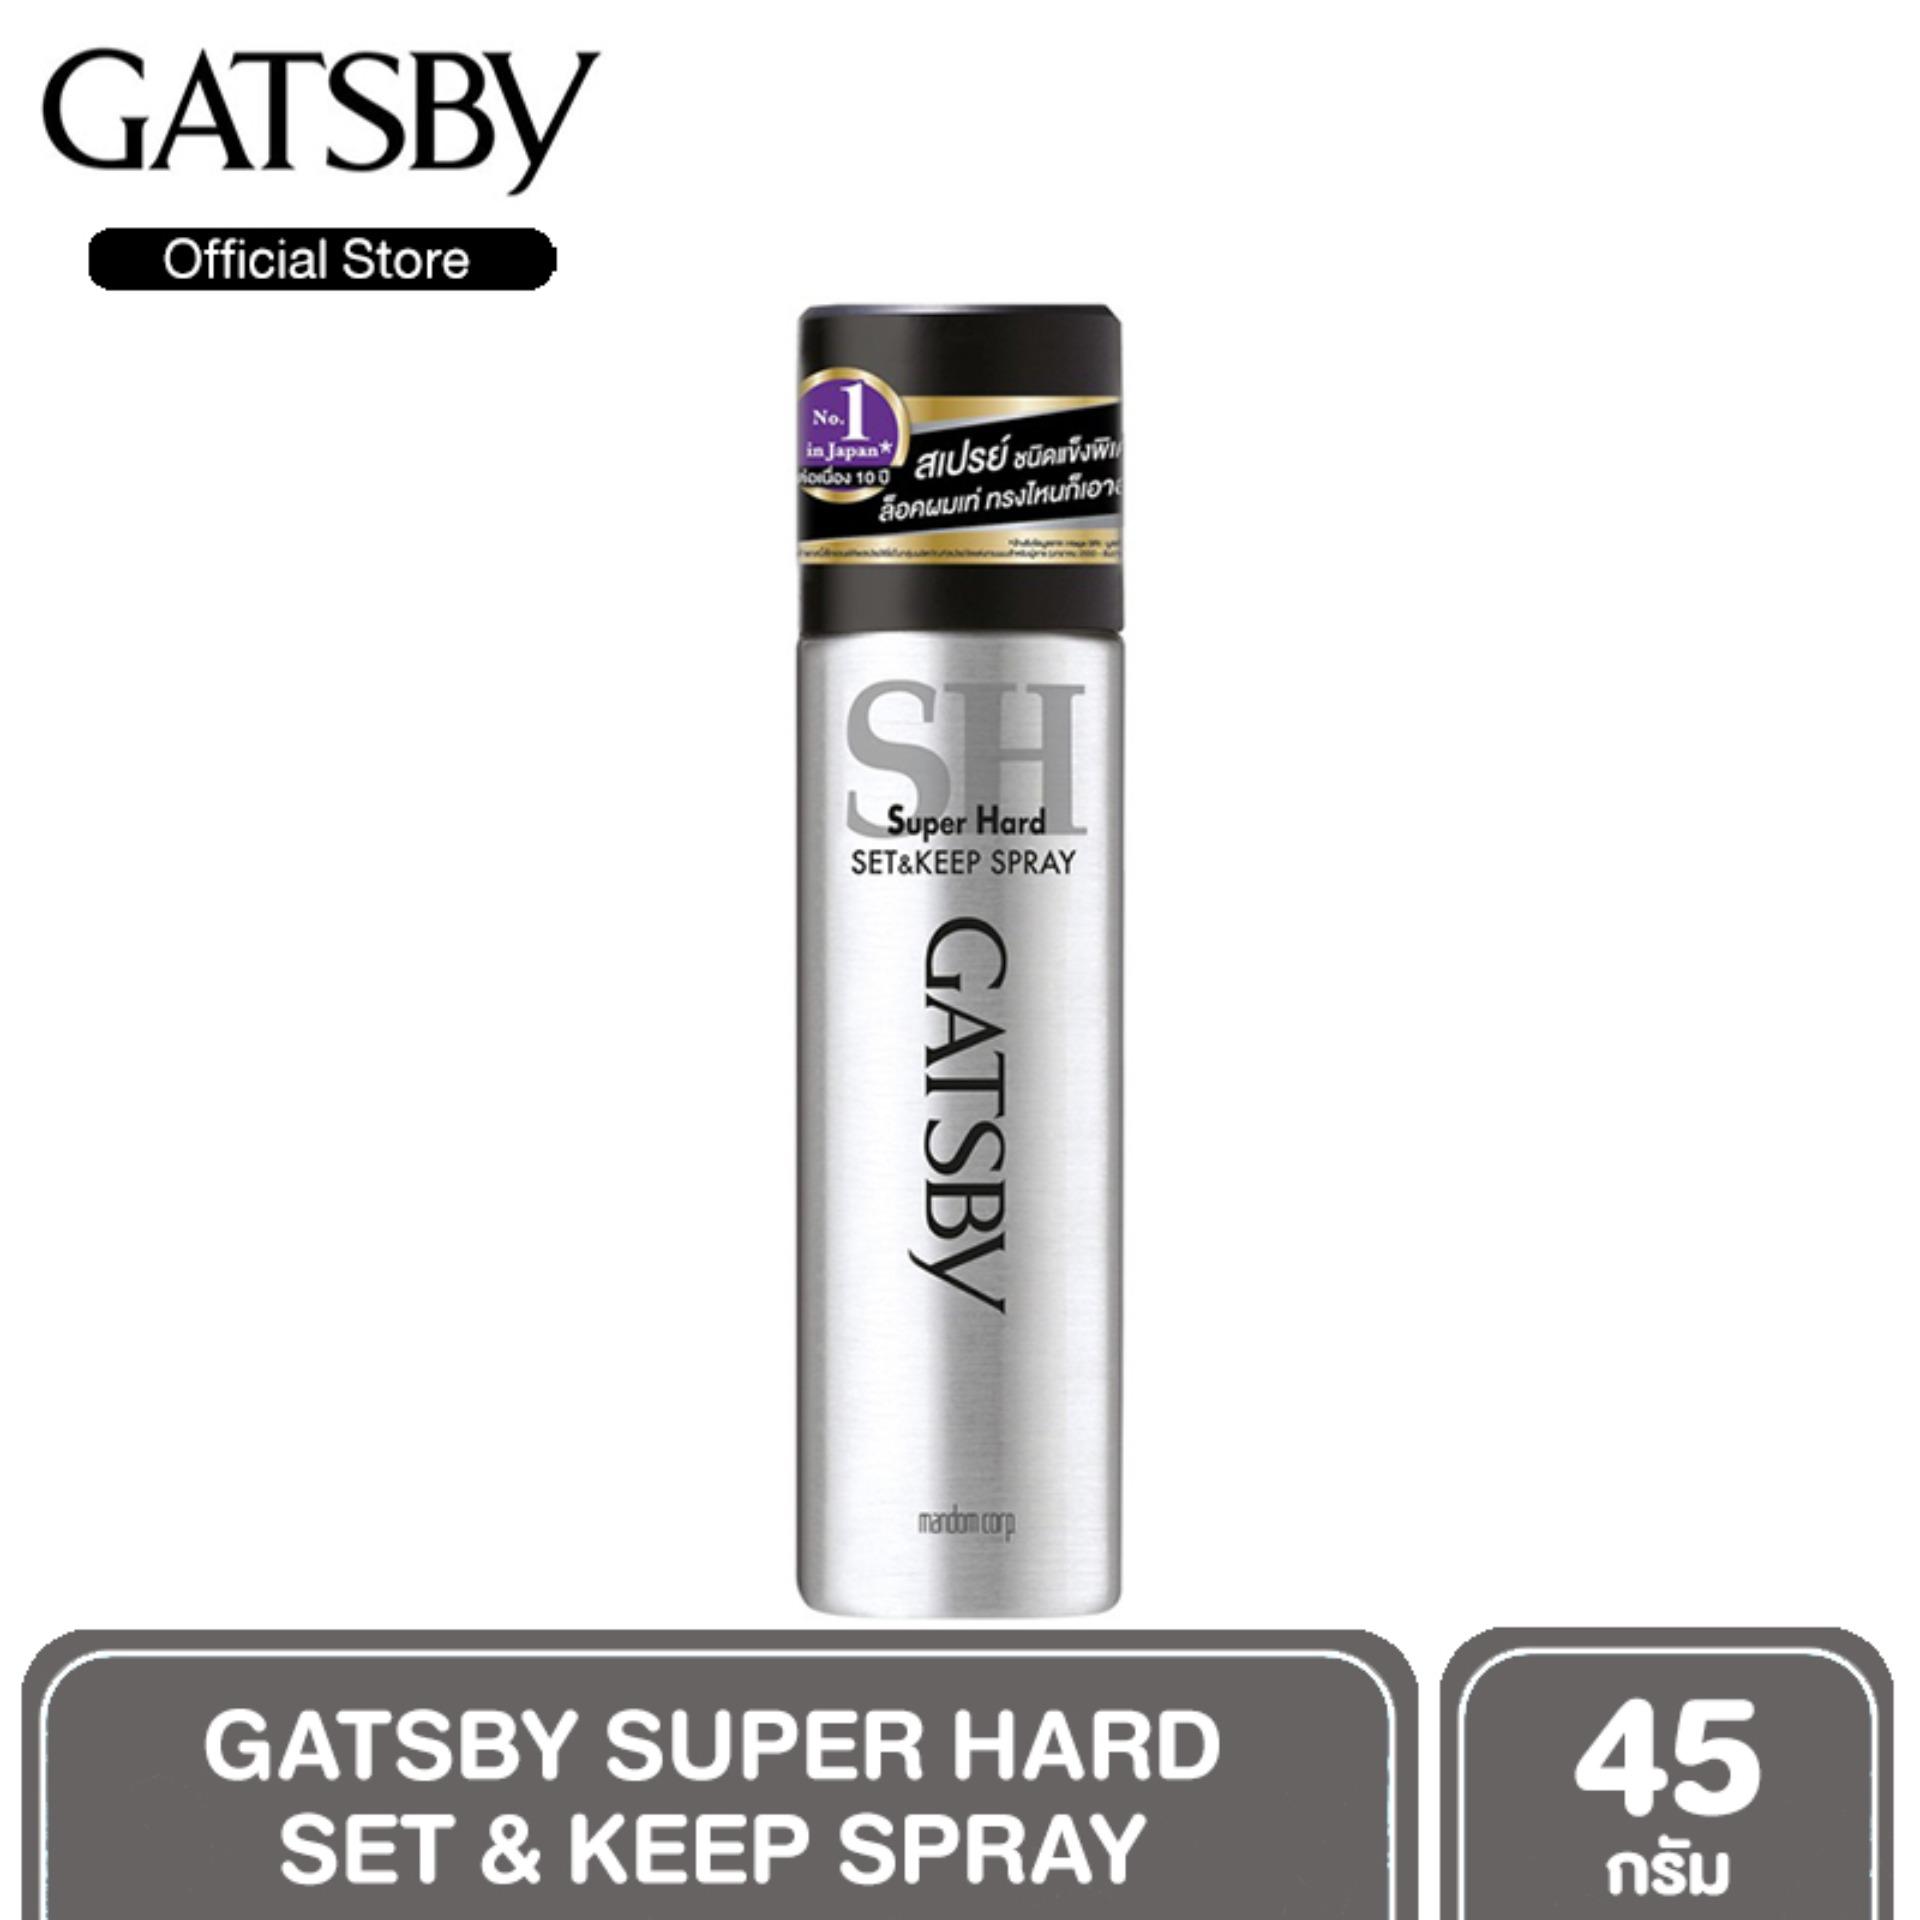 GATSBY SUPER HARD SET&KEEP SPRAY แกสบี้ ซุปเปอร์ฮาร์ด เซ็ท แอนด์ คีพ ขนาด 45g